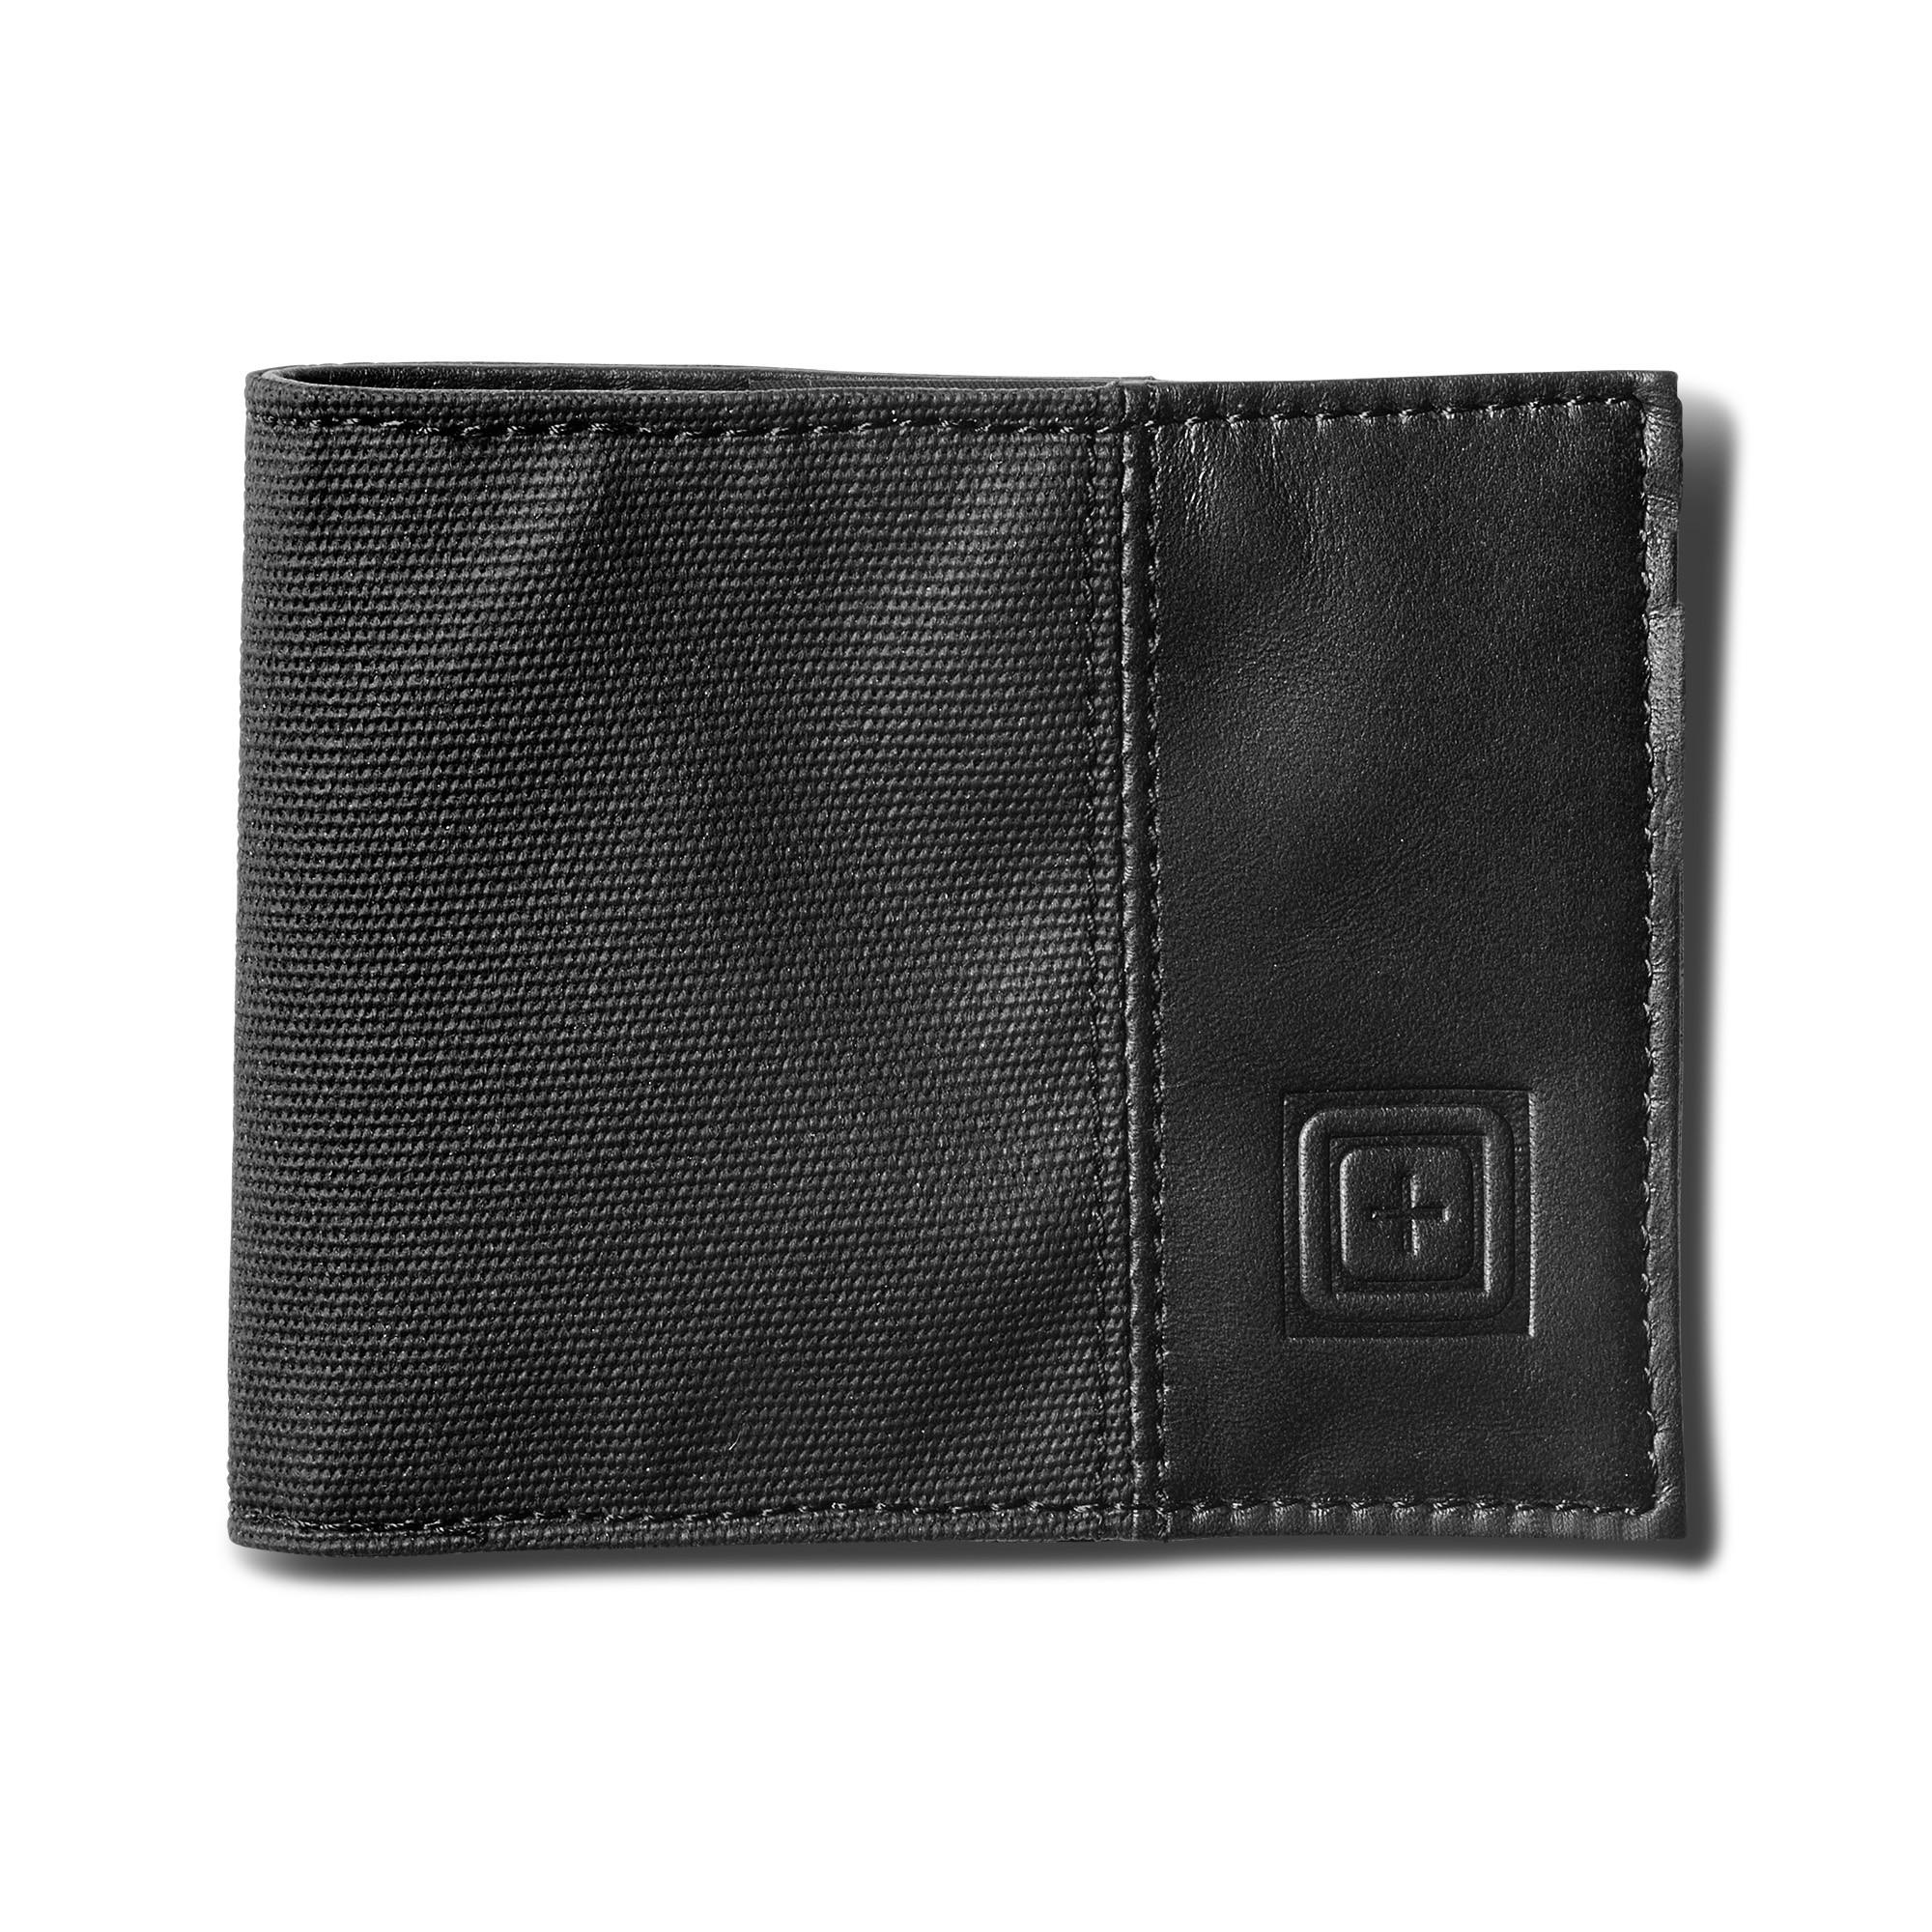 5.11 Phantom Leather Bifold Wallet